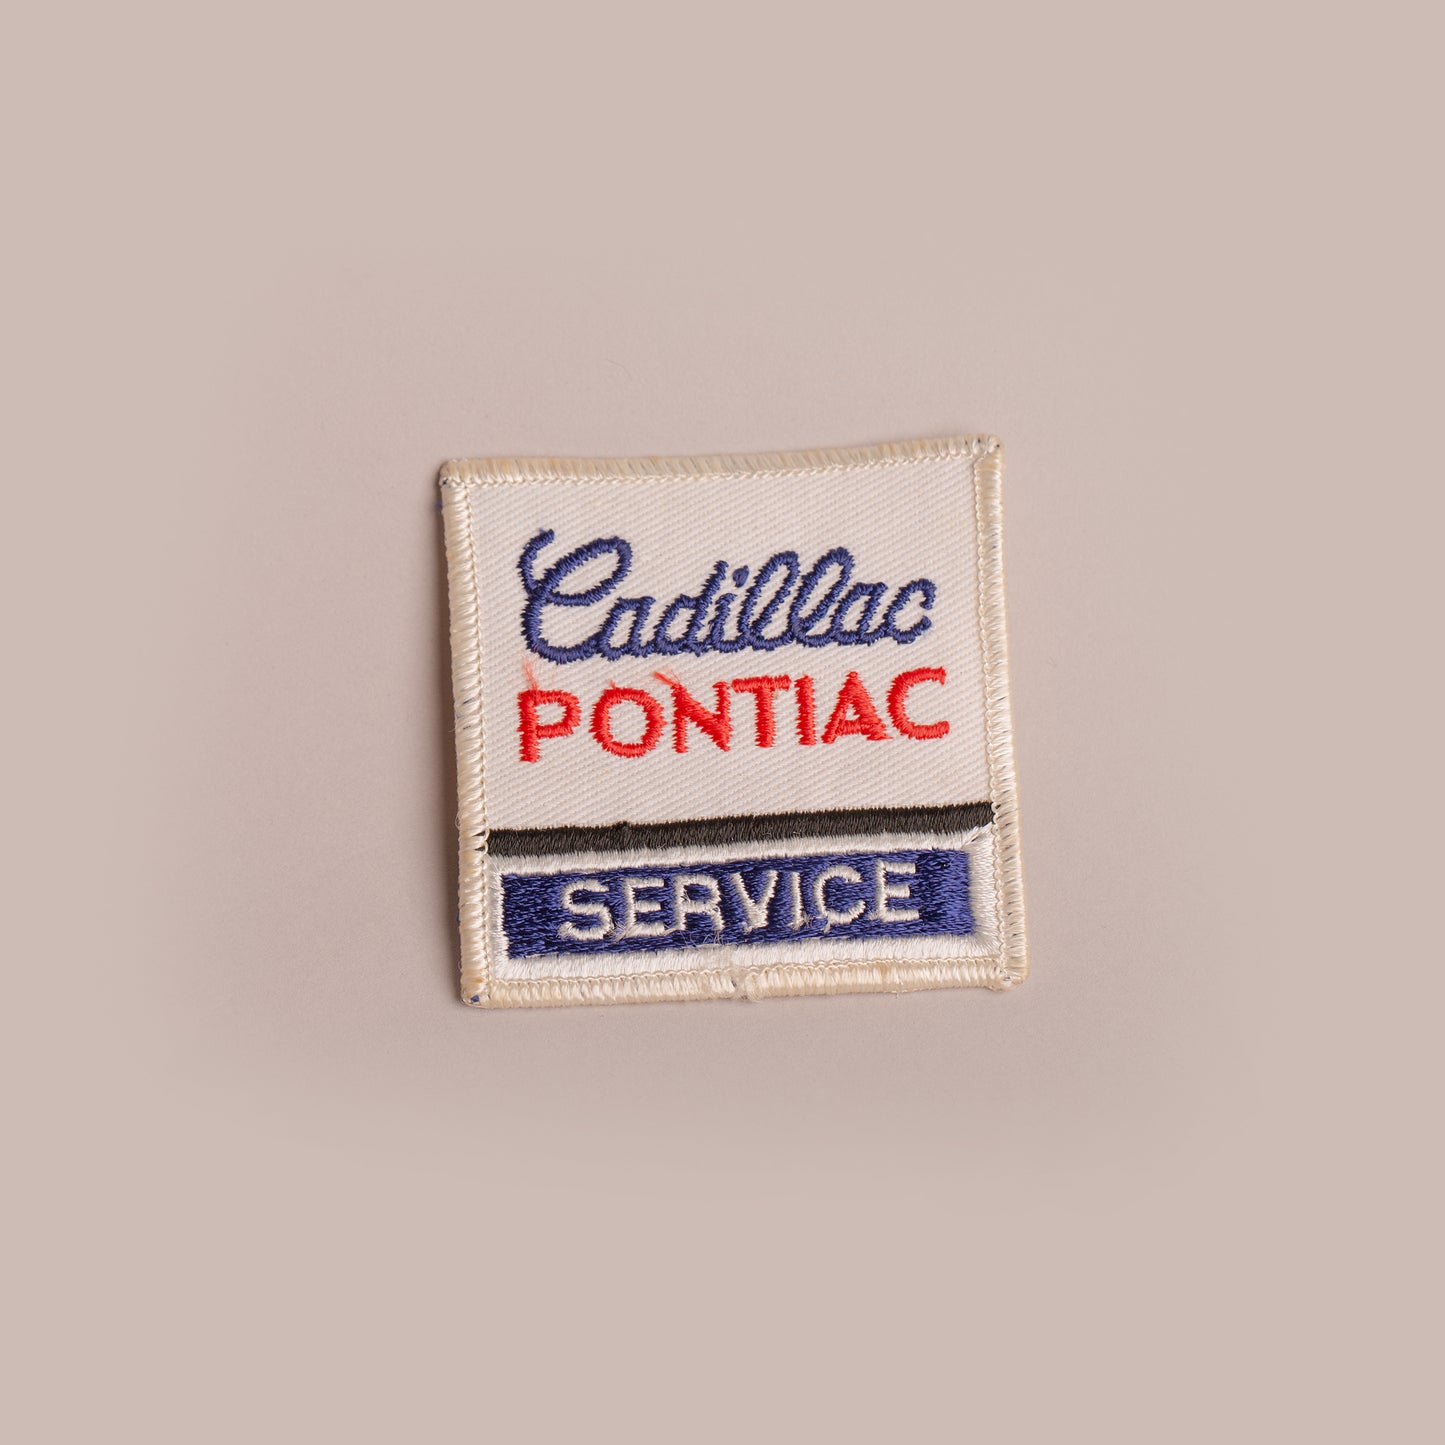 Vintage Patch - Cadillac Pontiac Service